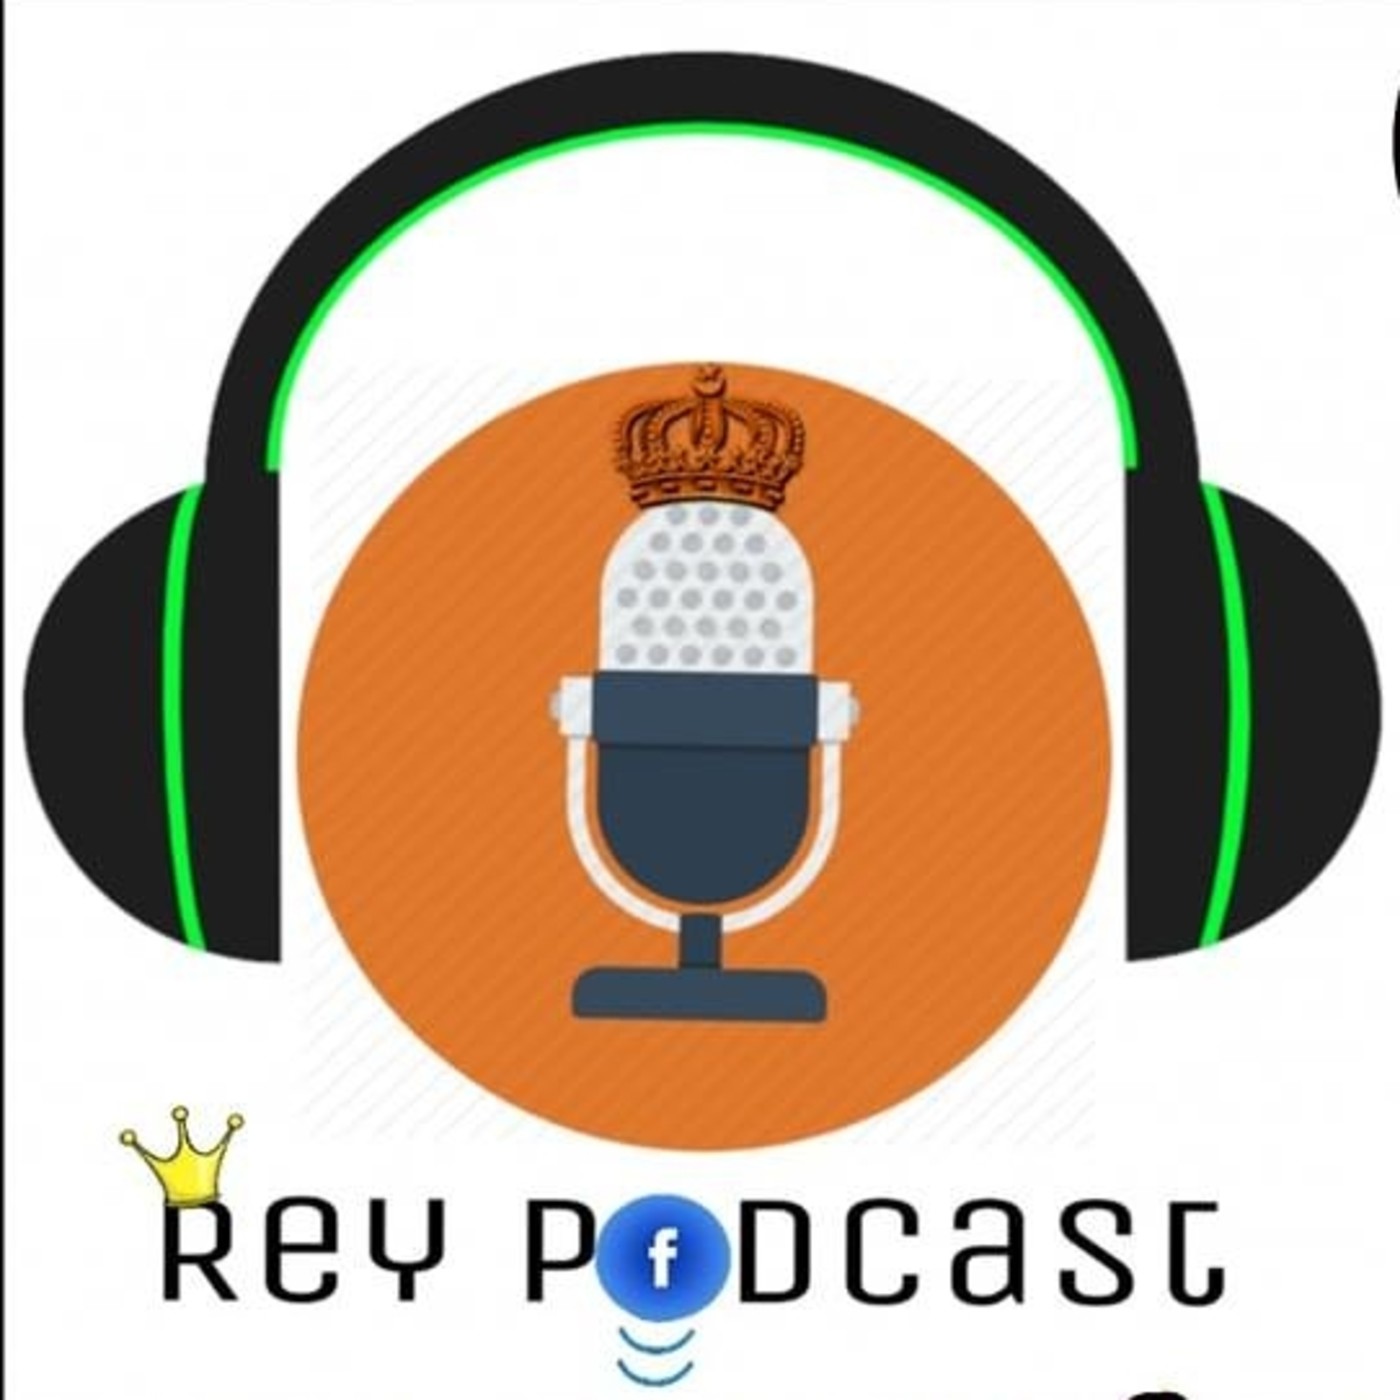 Rey Podcast